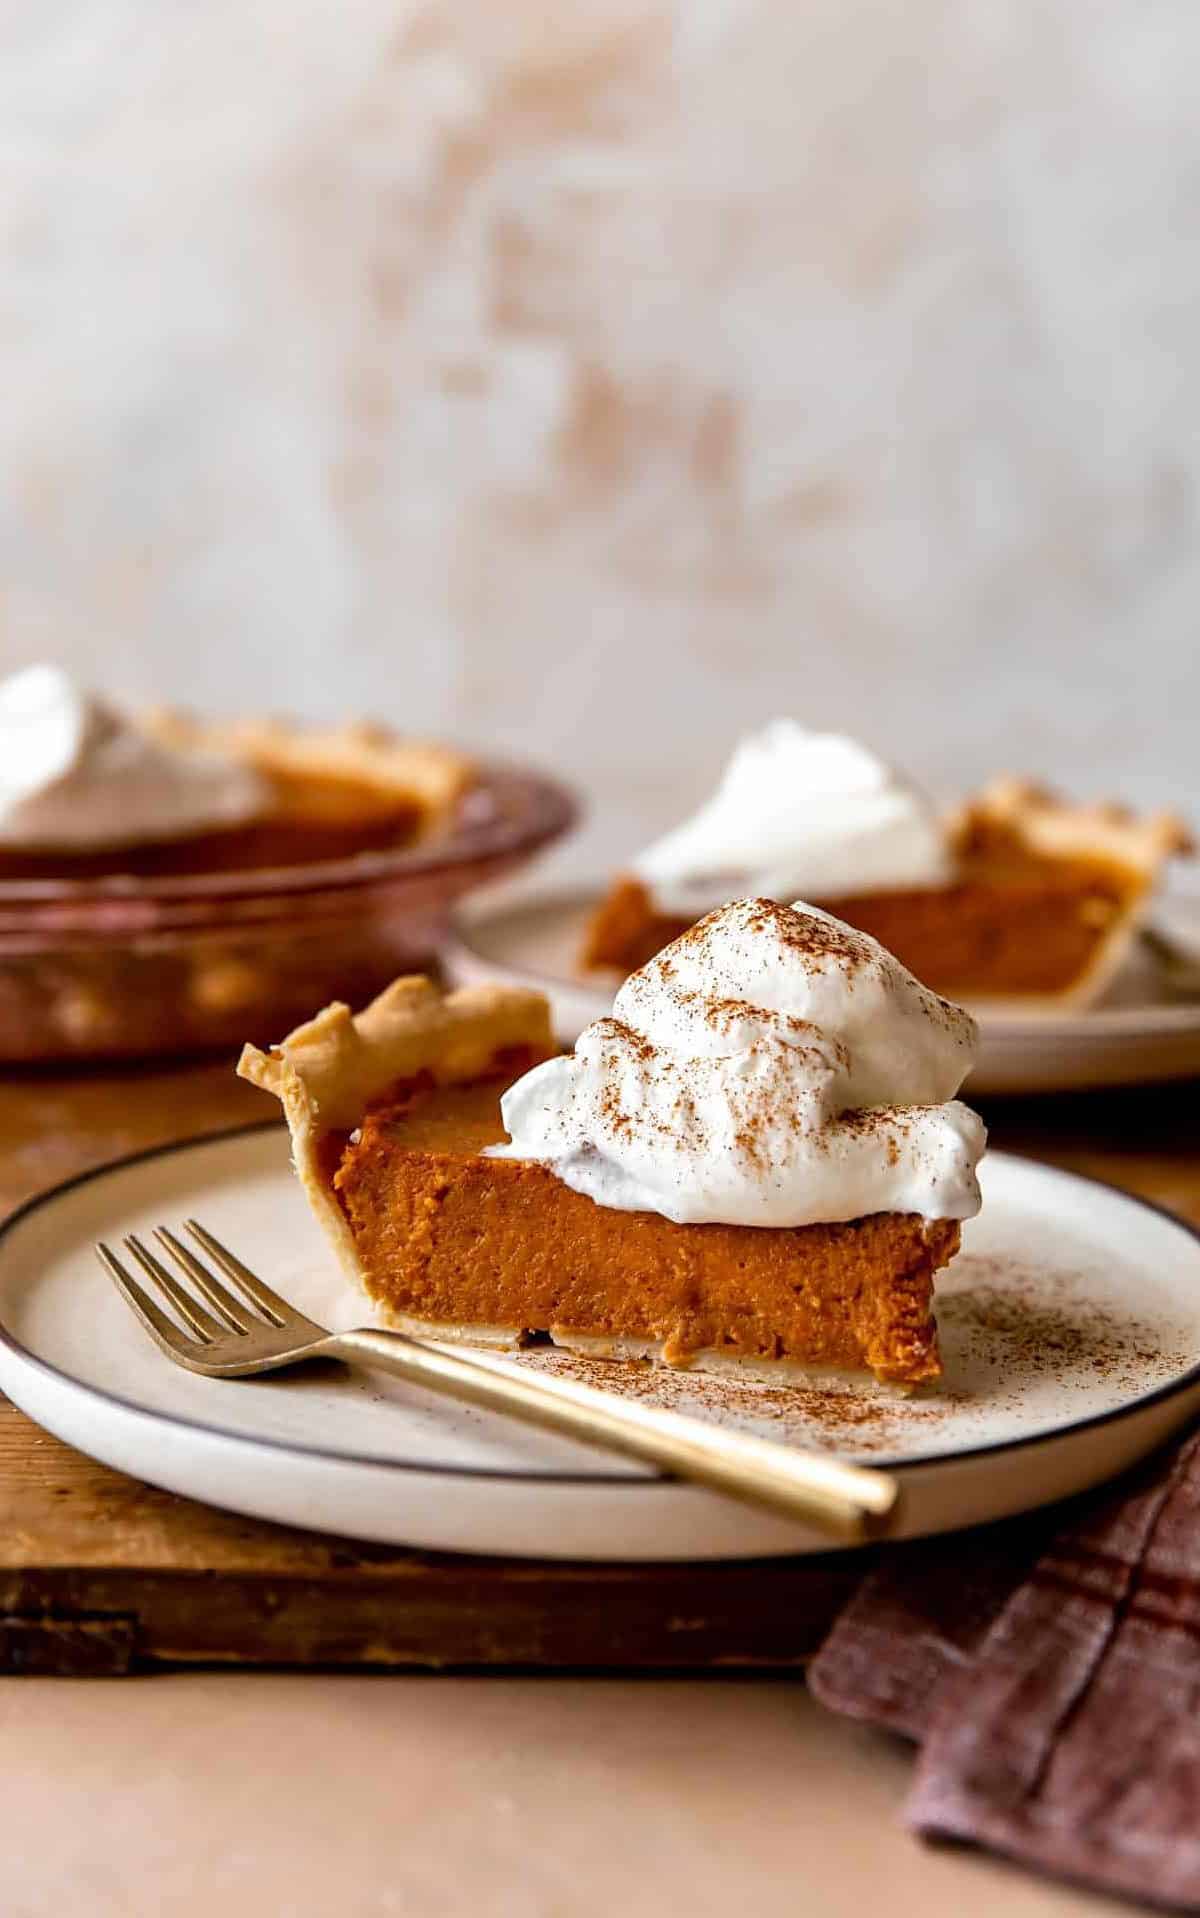  Fall favorite: warm and cozy Sweet Potato Pie.